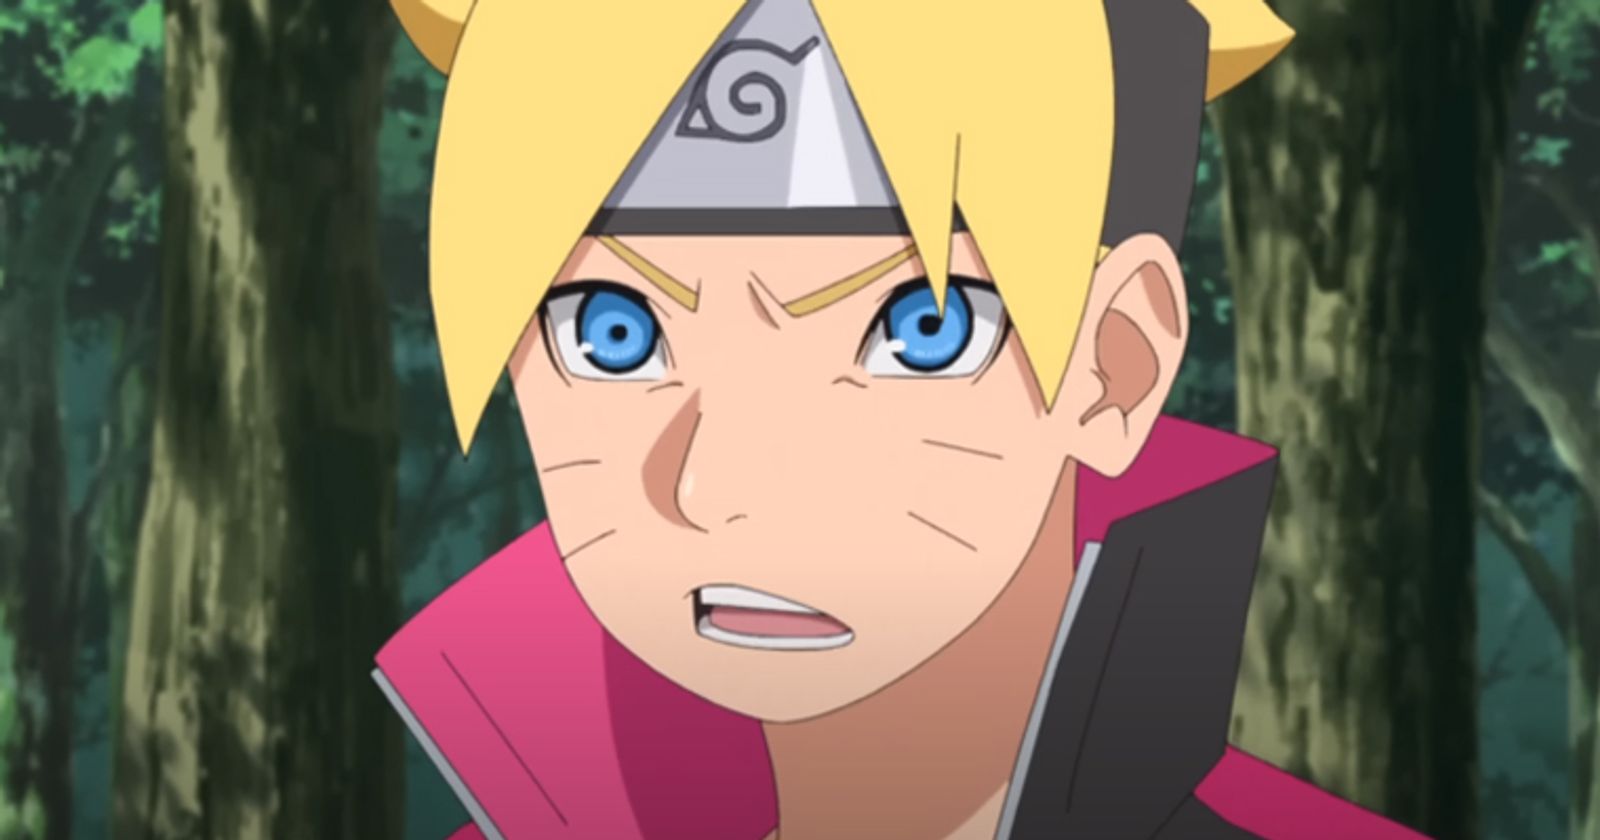 Boruto : Naruto Next Generation Episódio 256 Data de lançamento 